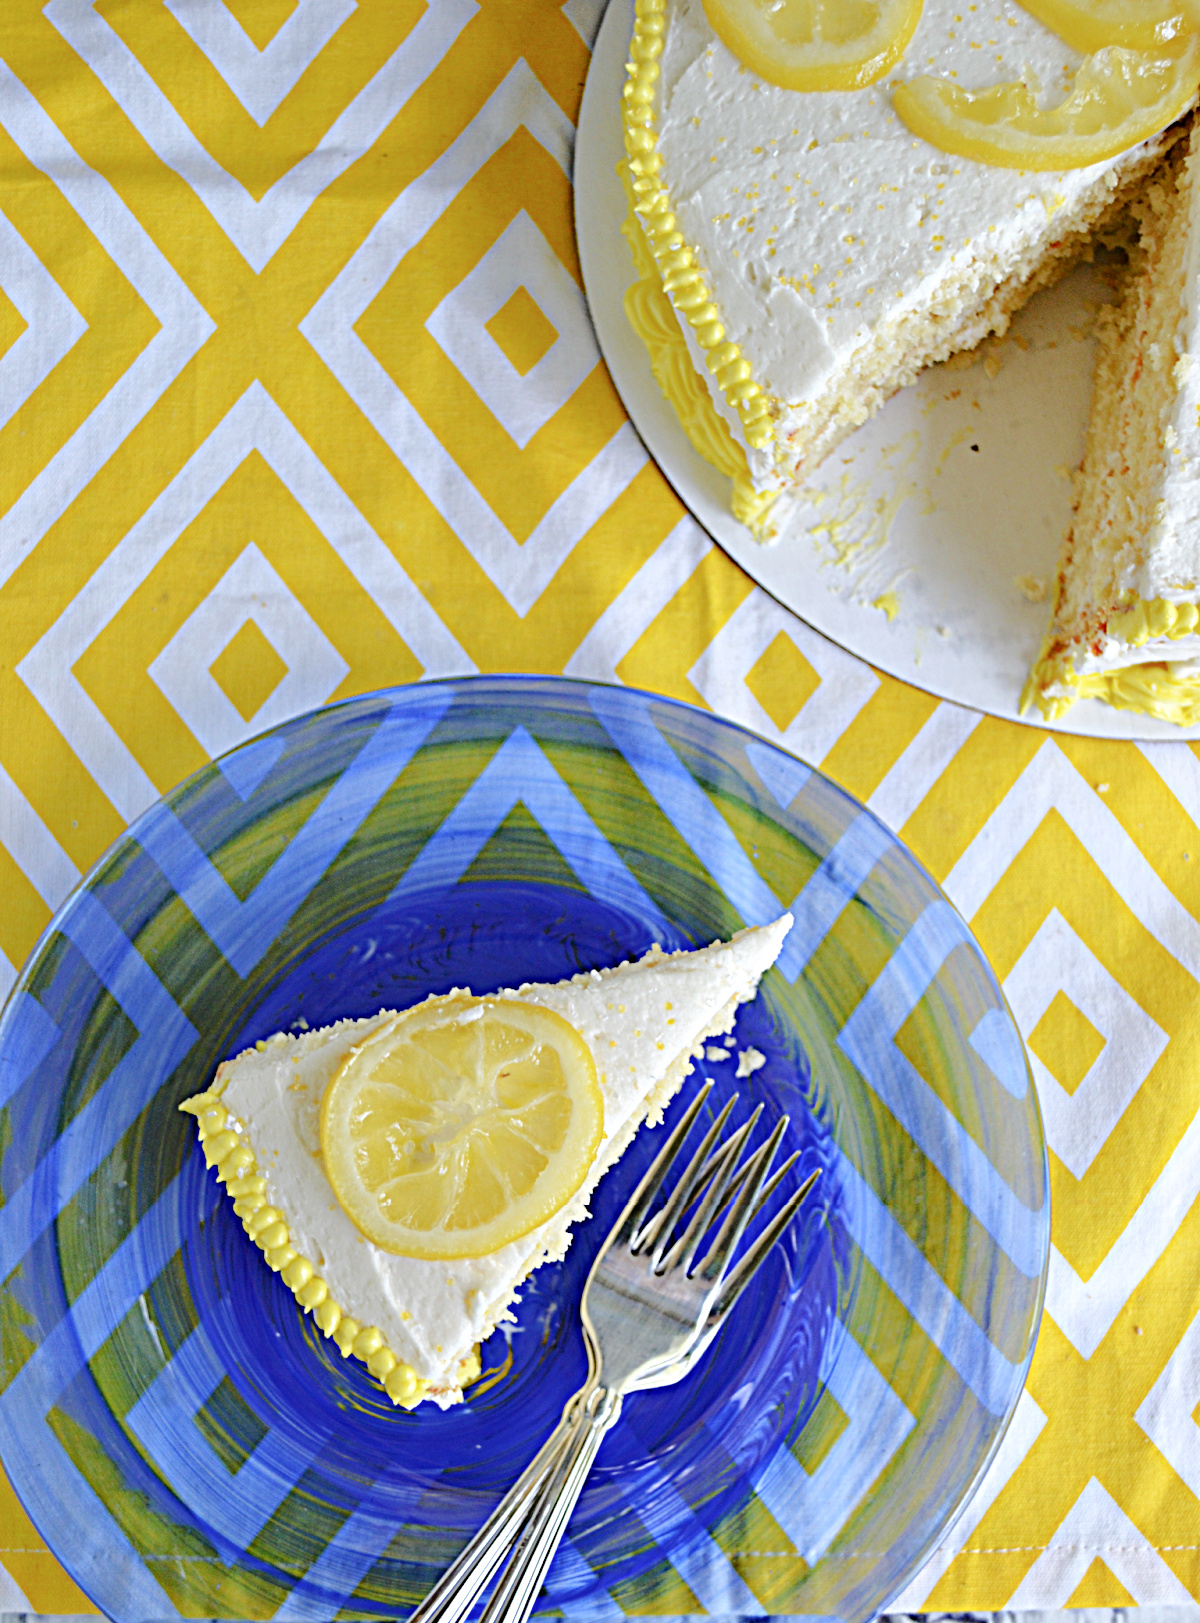 Lemonade Cake